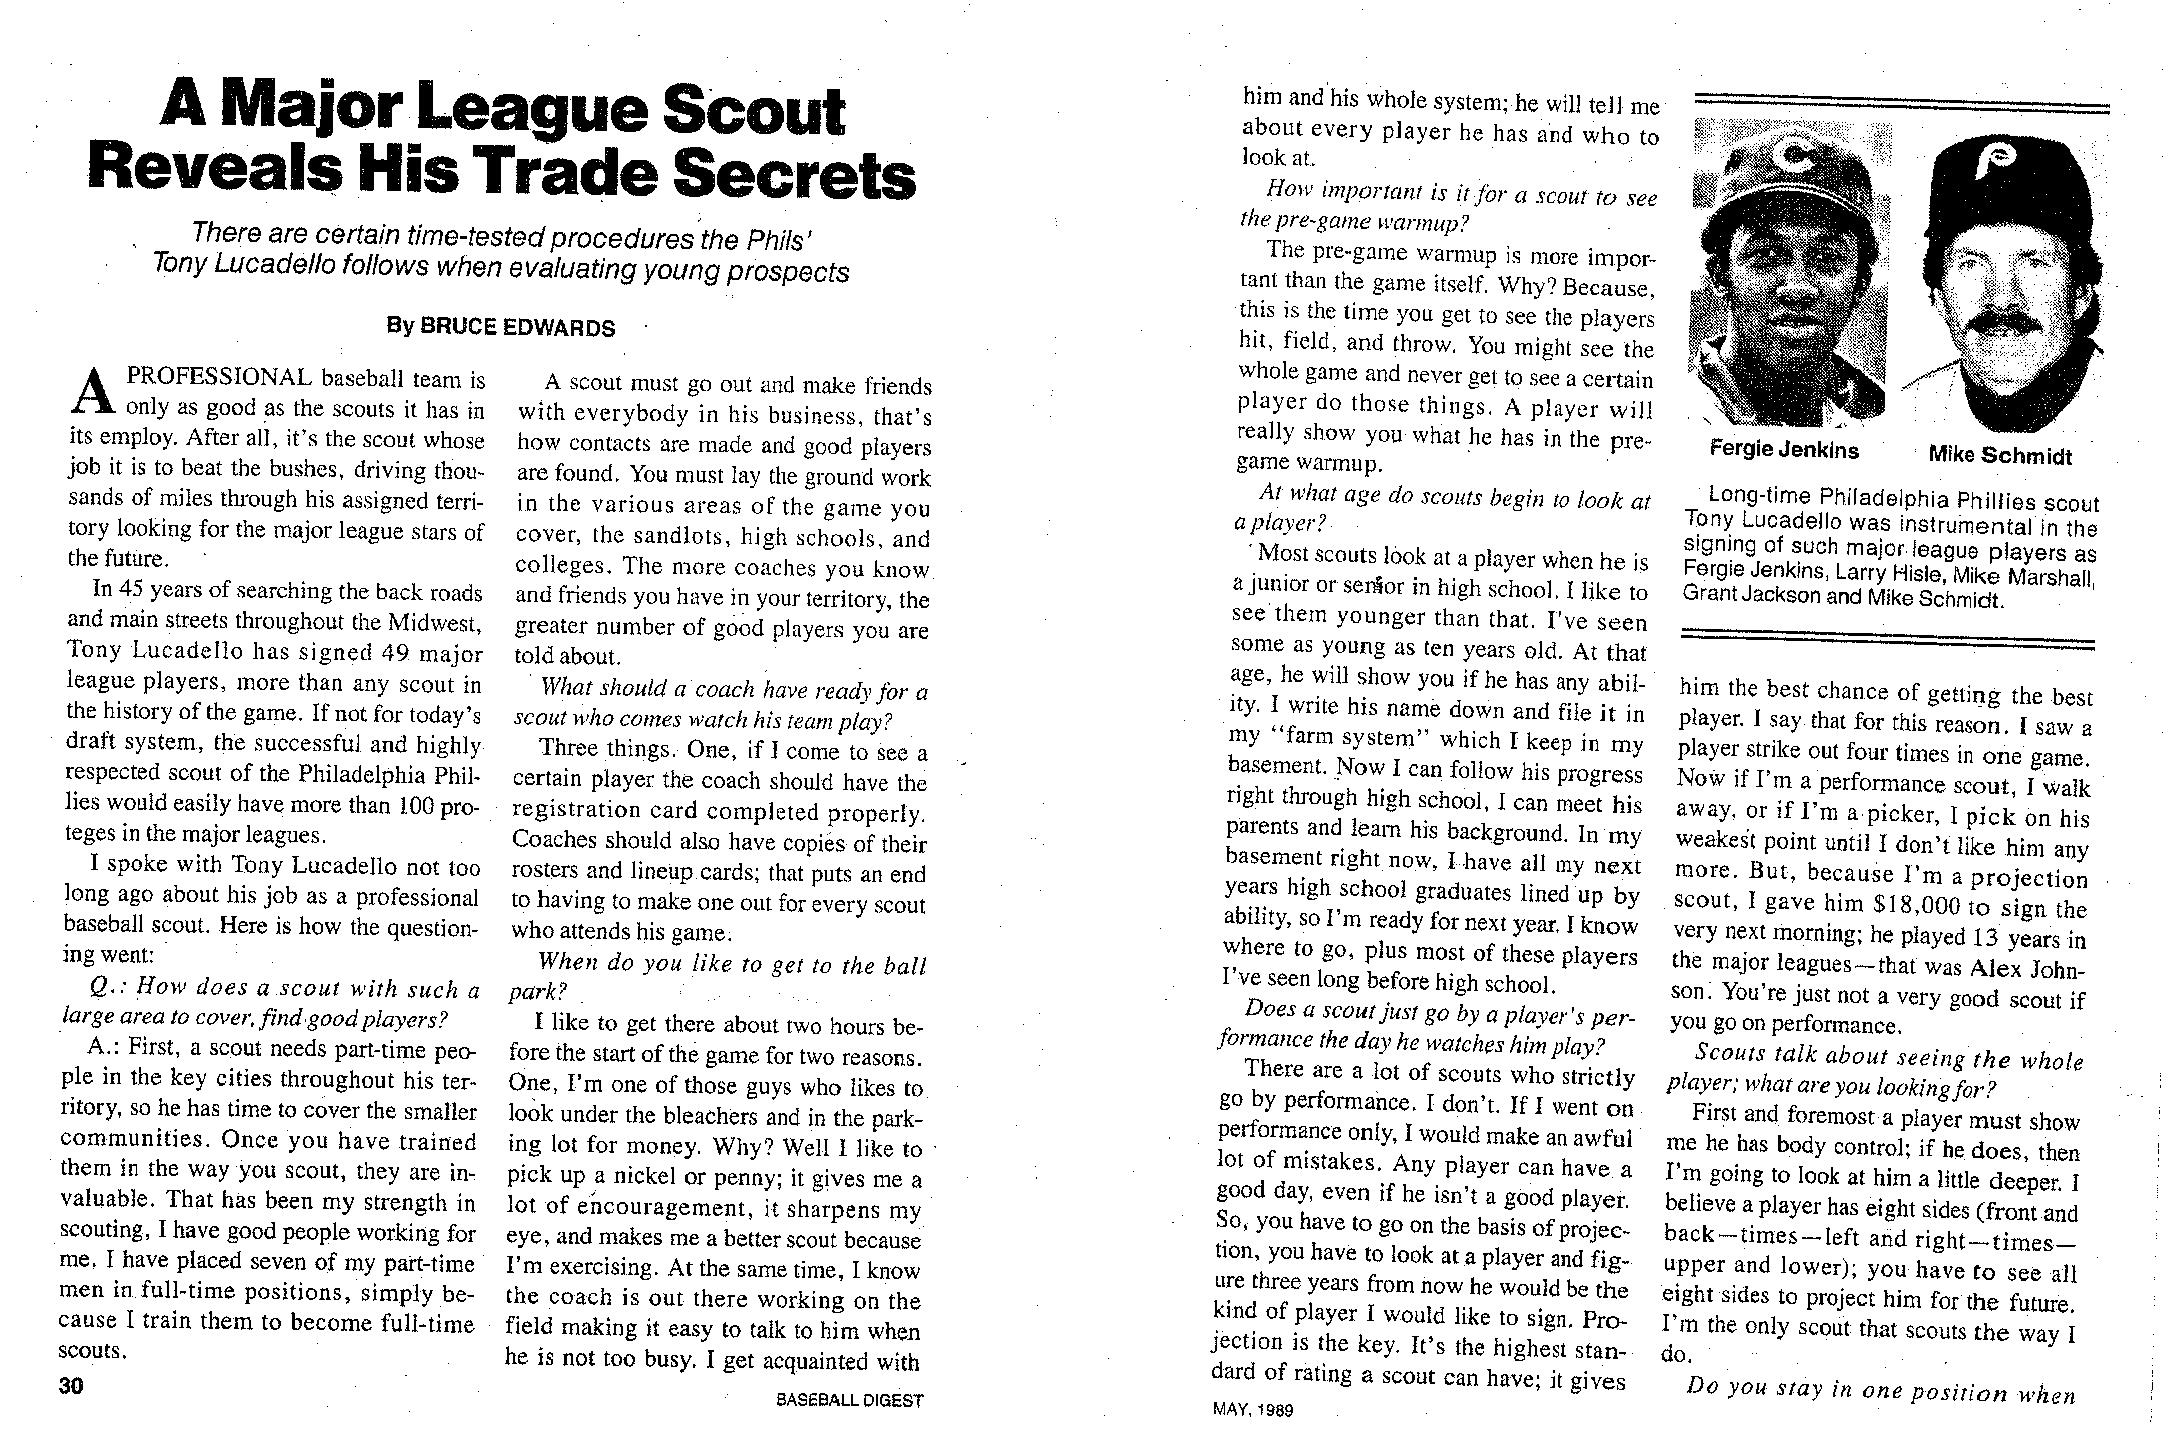 Baseball Digest Scout story